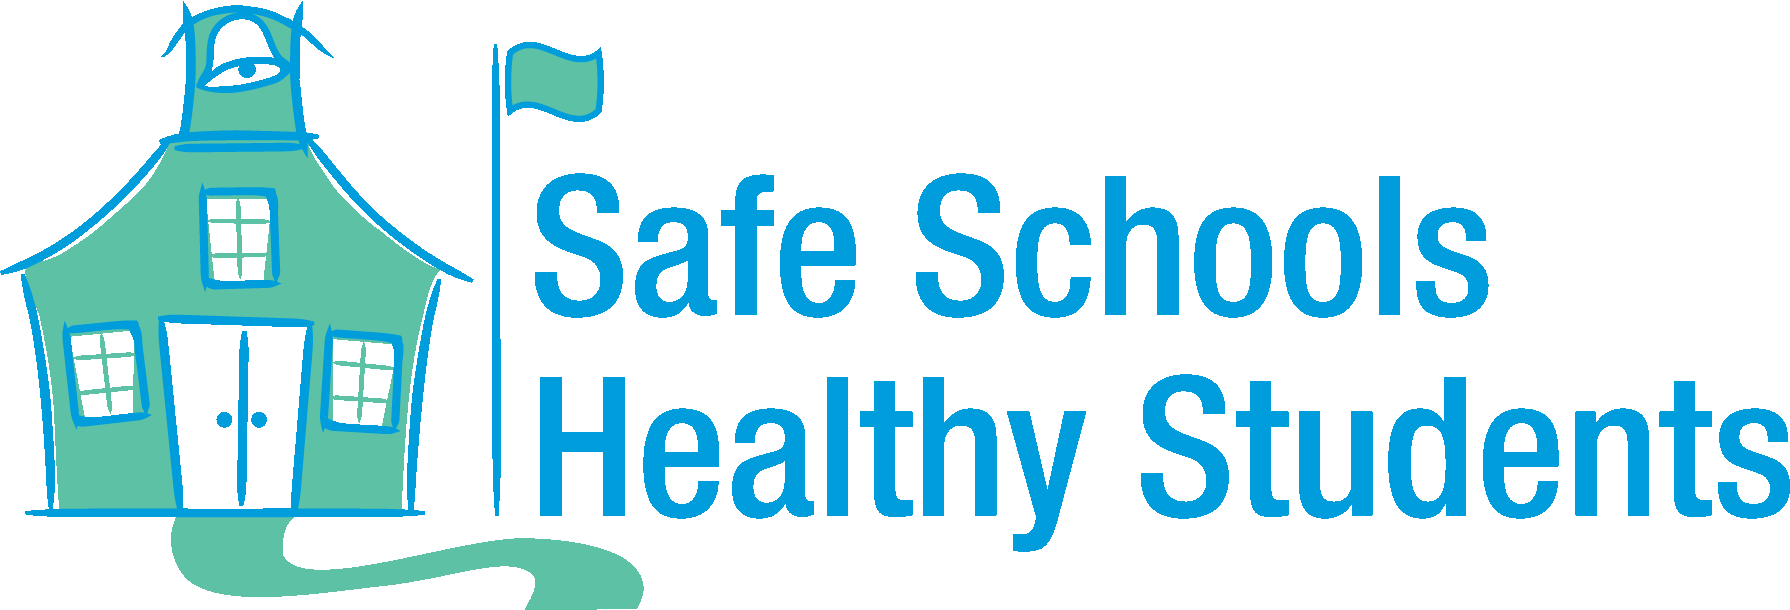 Safer school. Safe Schools. Students for healthy Oregon логотип. School Counselor logo. HH students лого.